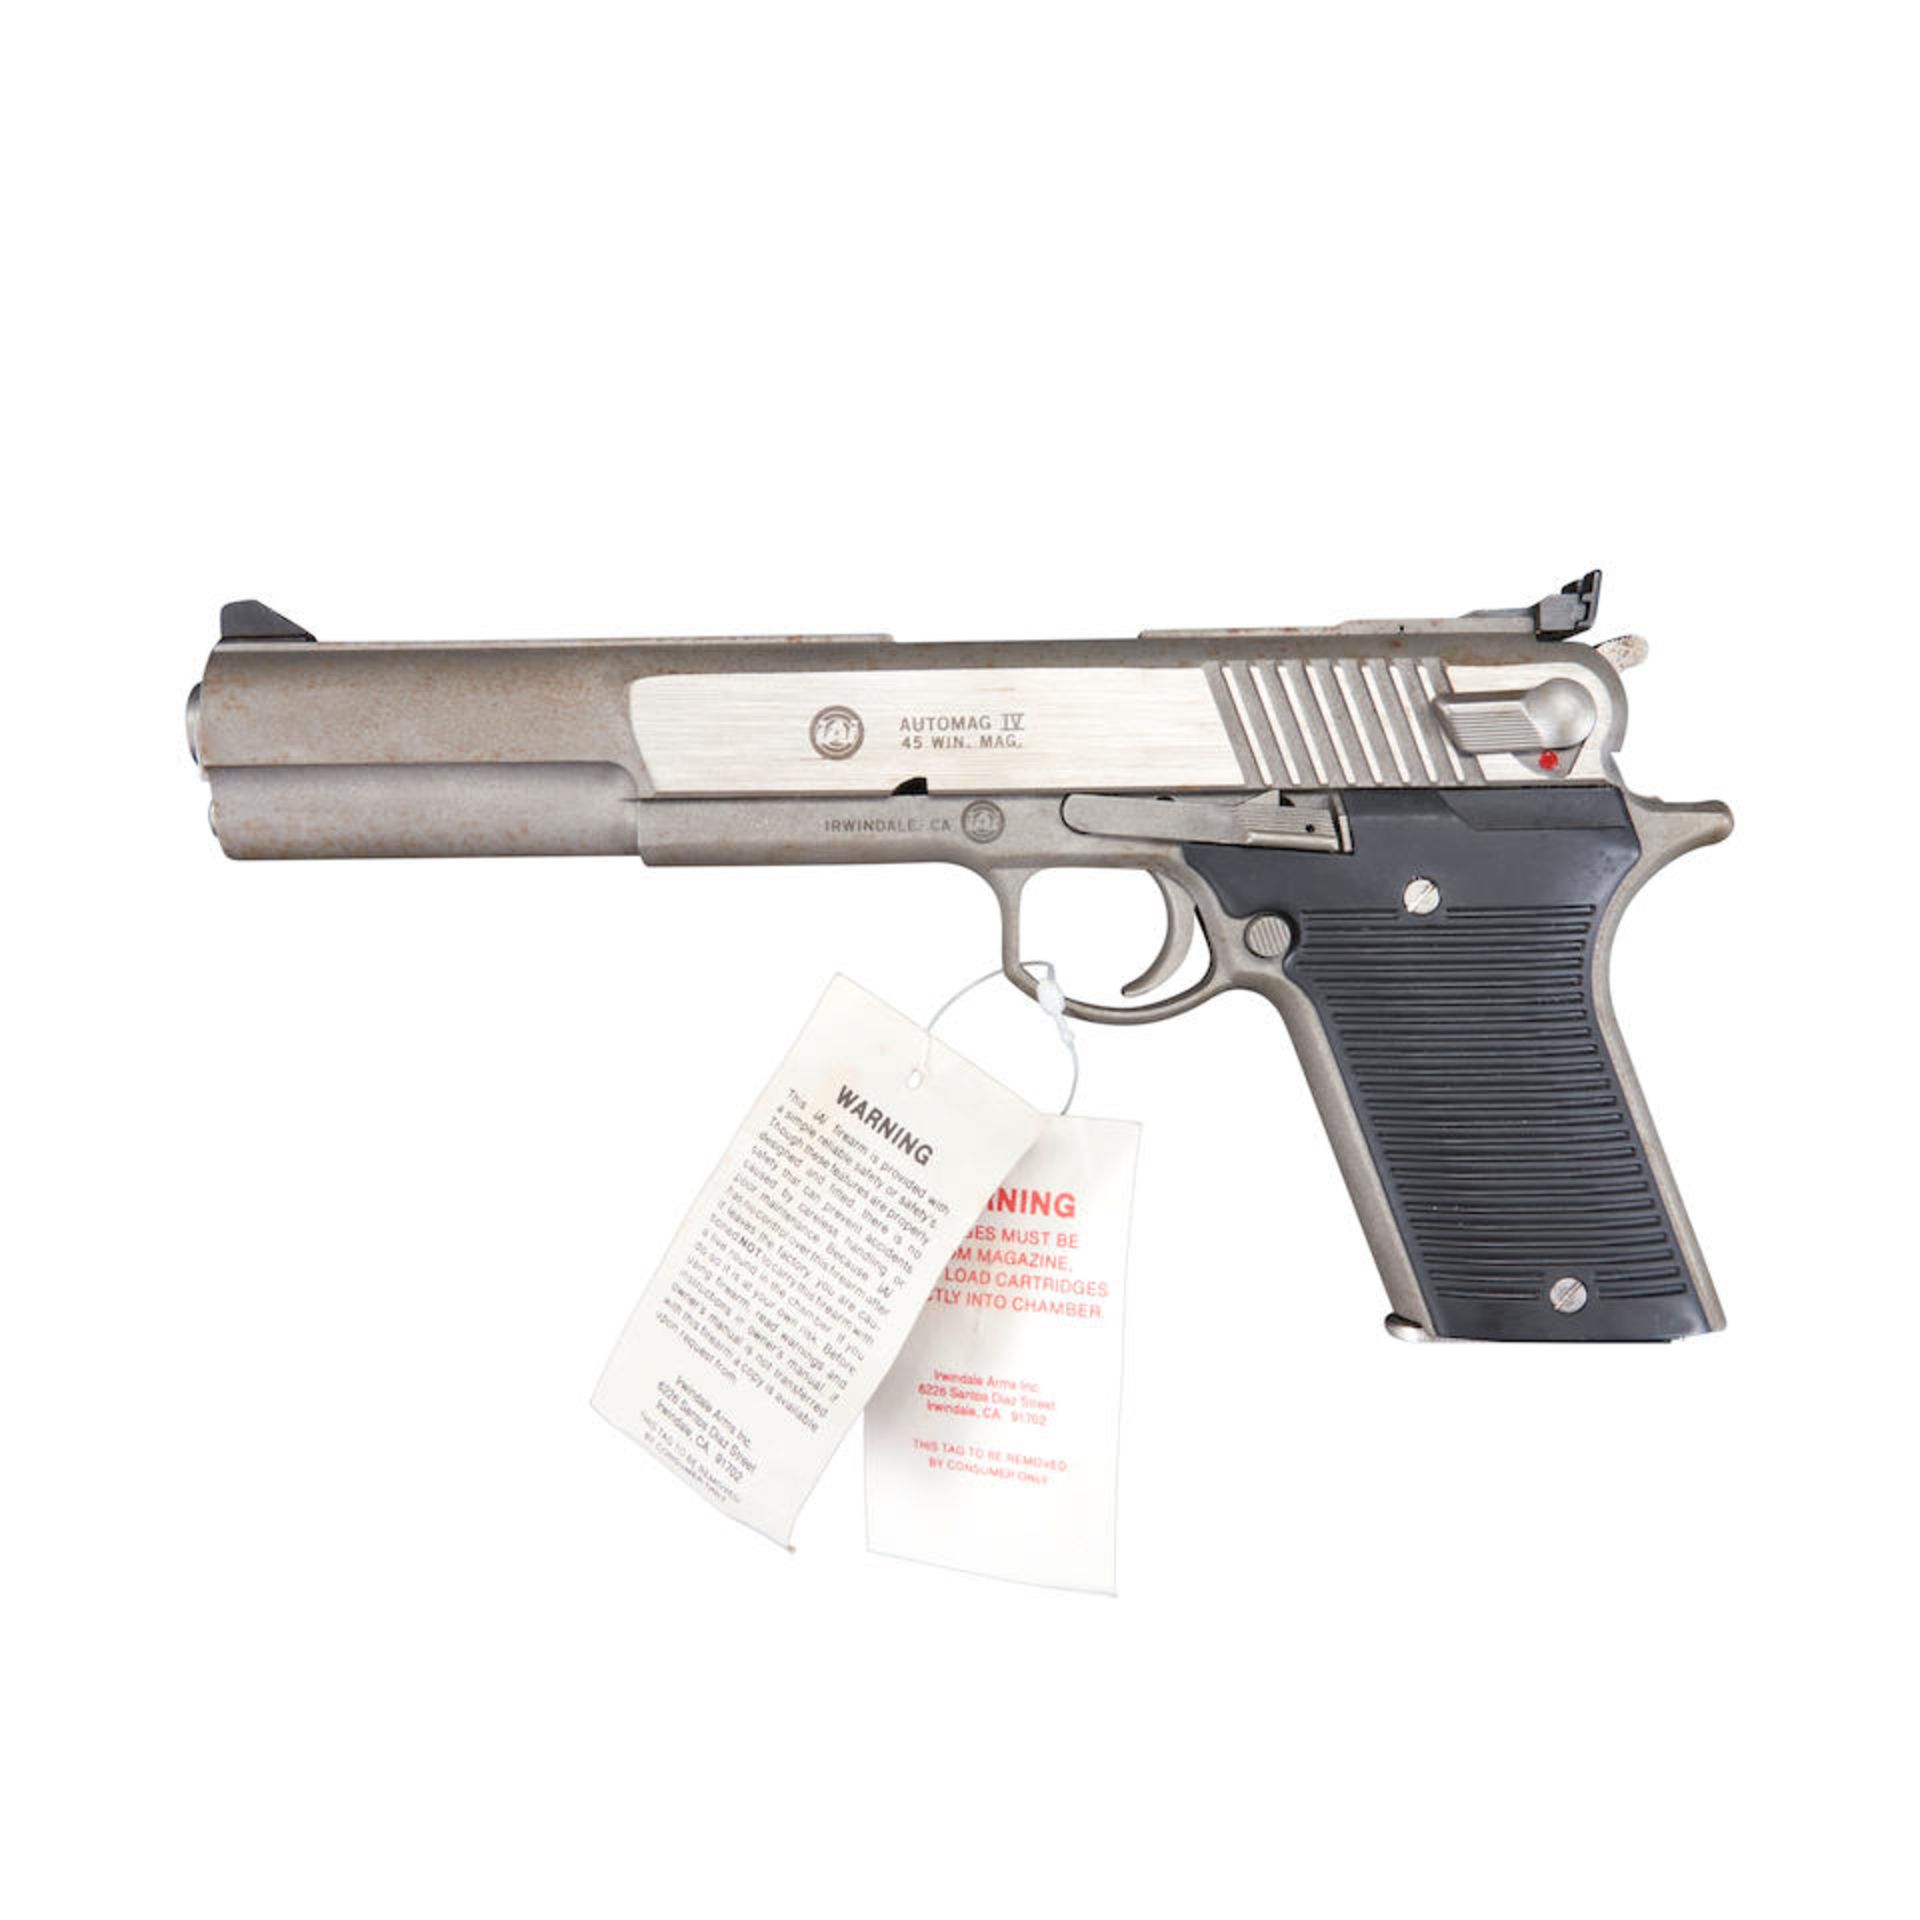 Irwindale Arms Inc., Automag IV Semi-Automatic Pistol, Modern handgun - Bild 2 aus 3